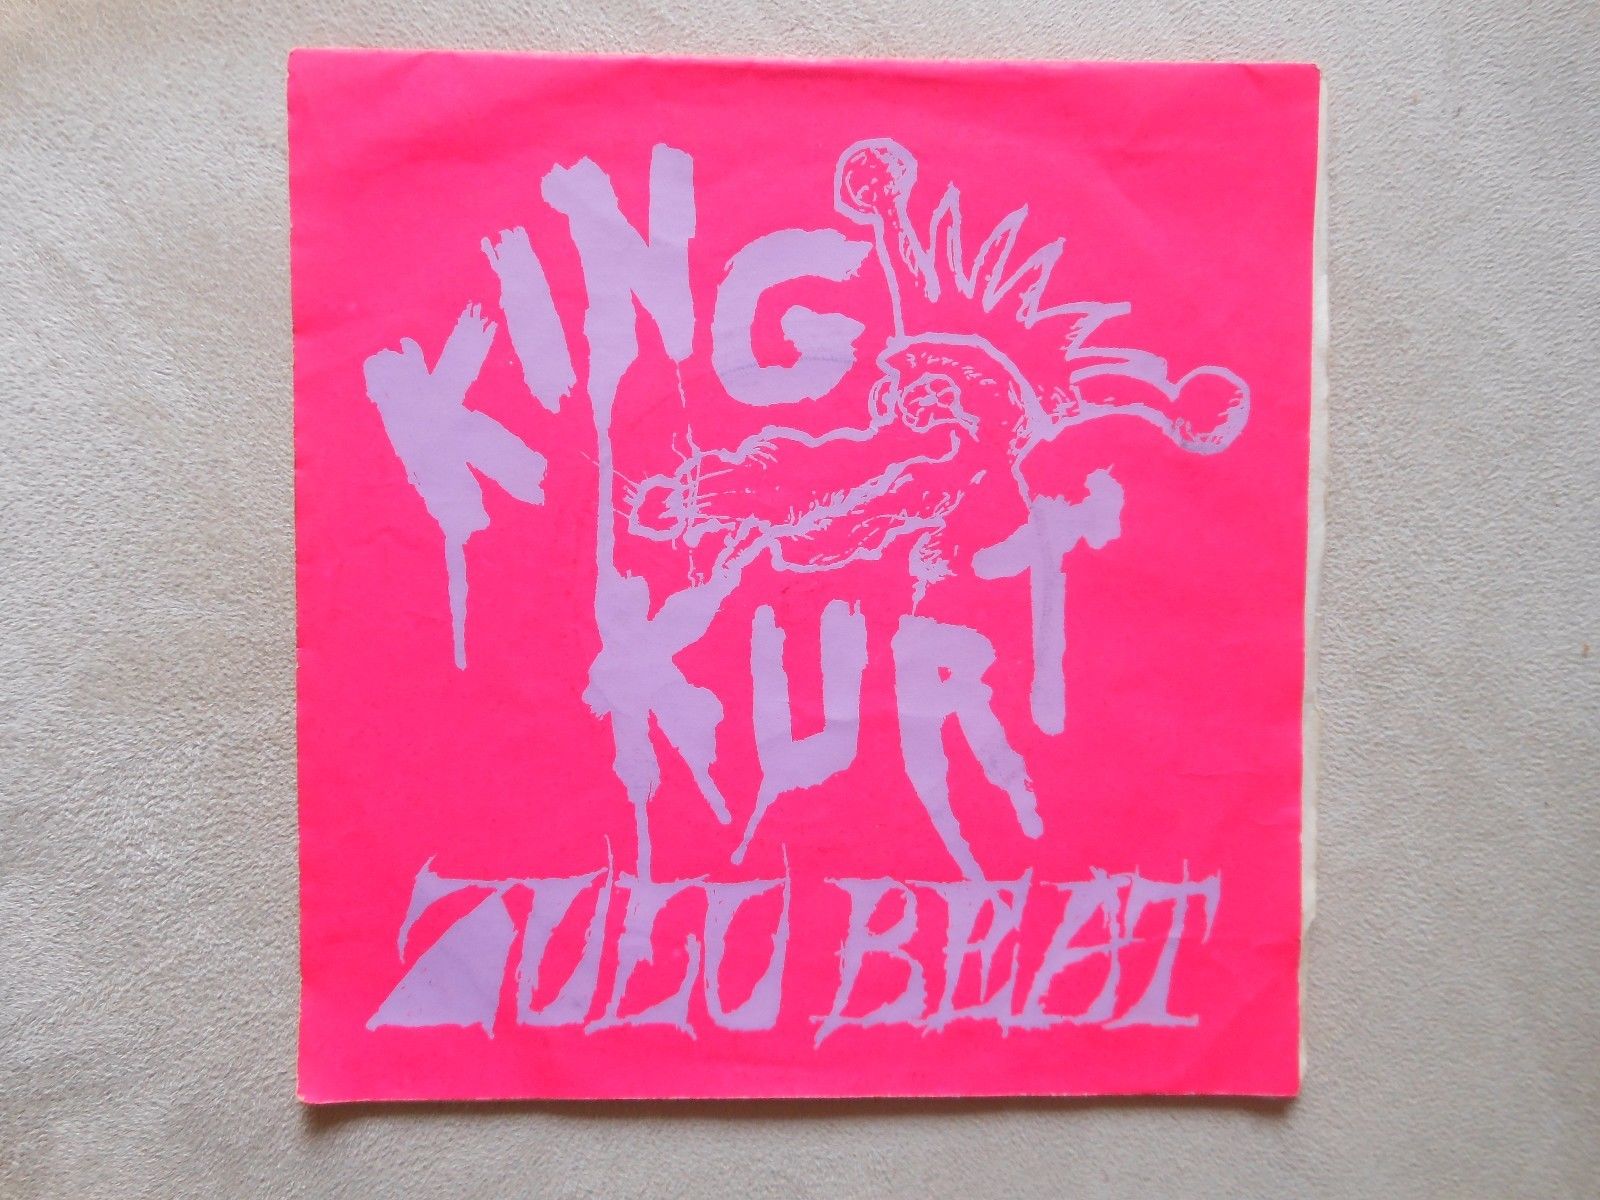 King Kurt 7 Numbered Light Green Vinyl Zulu Beat With Dayglo Pink Cover